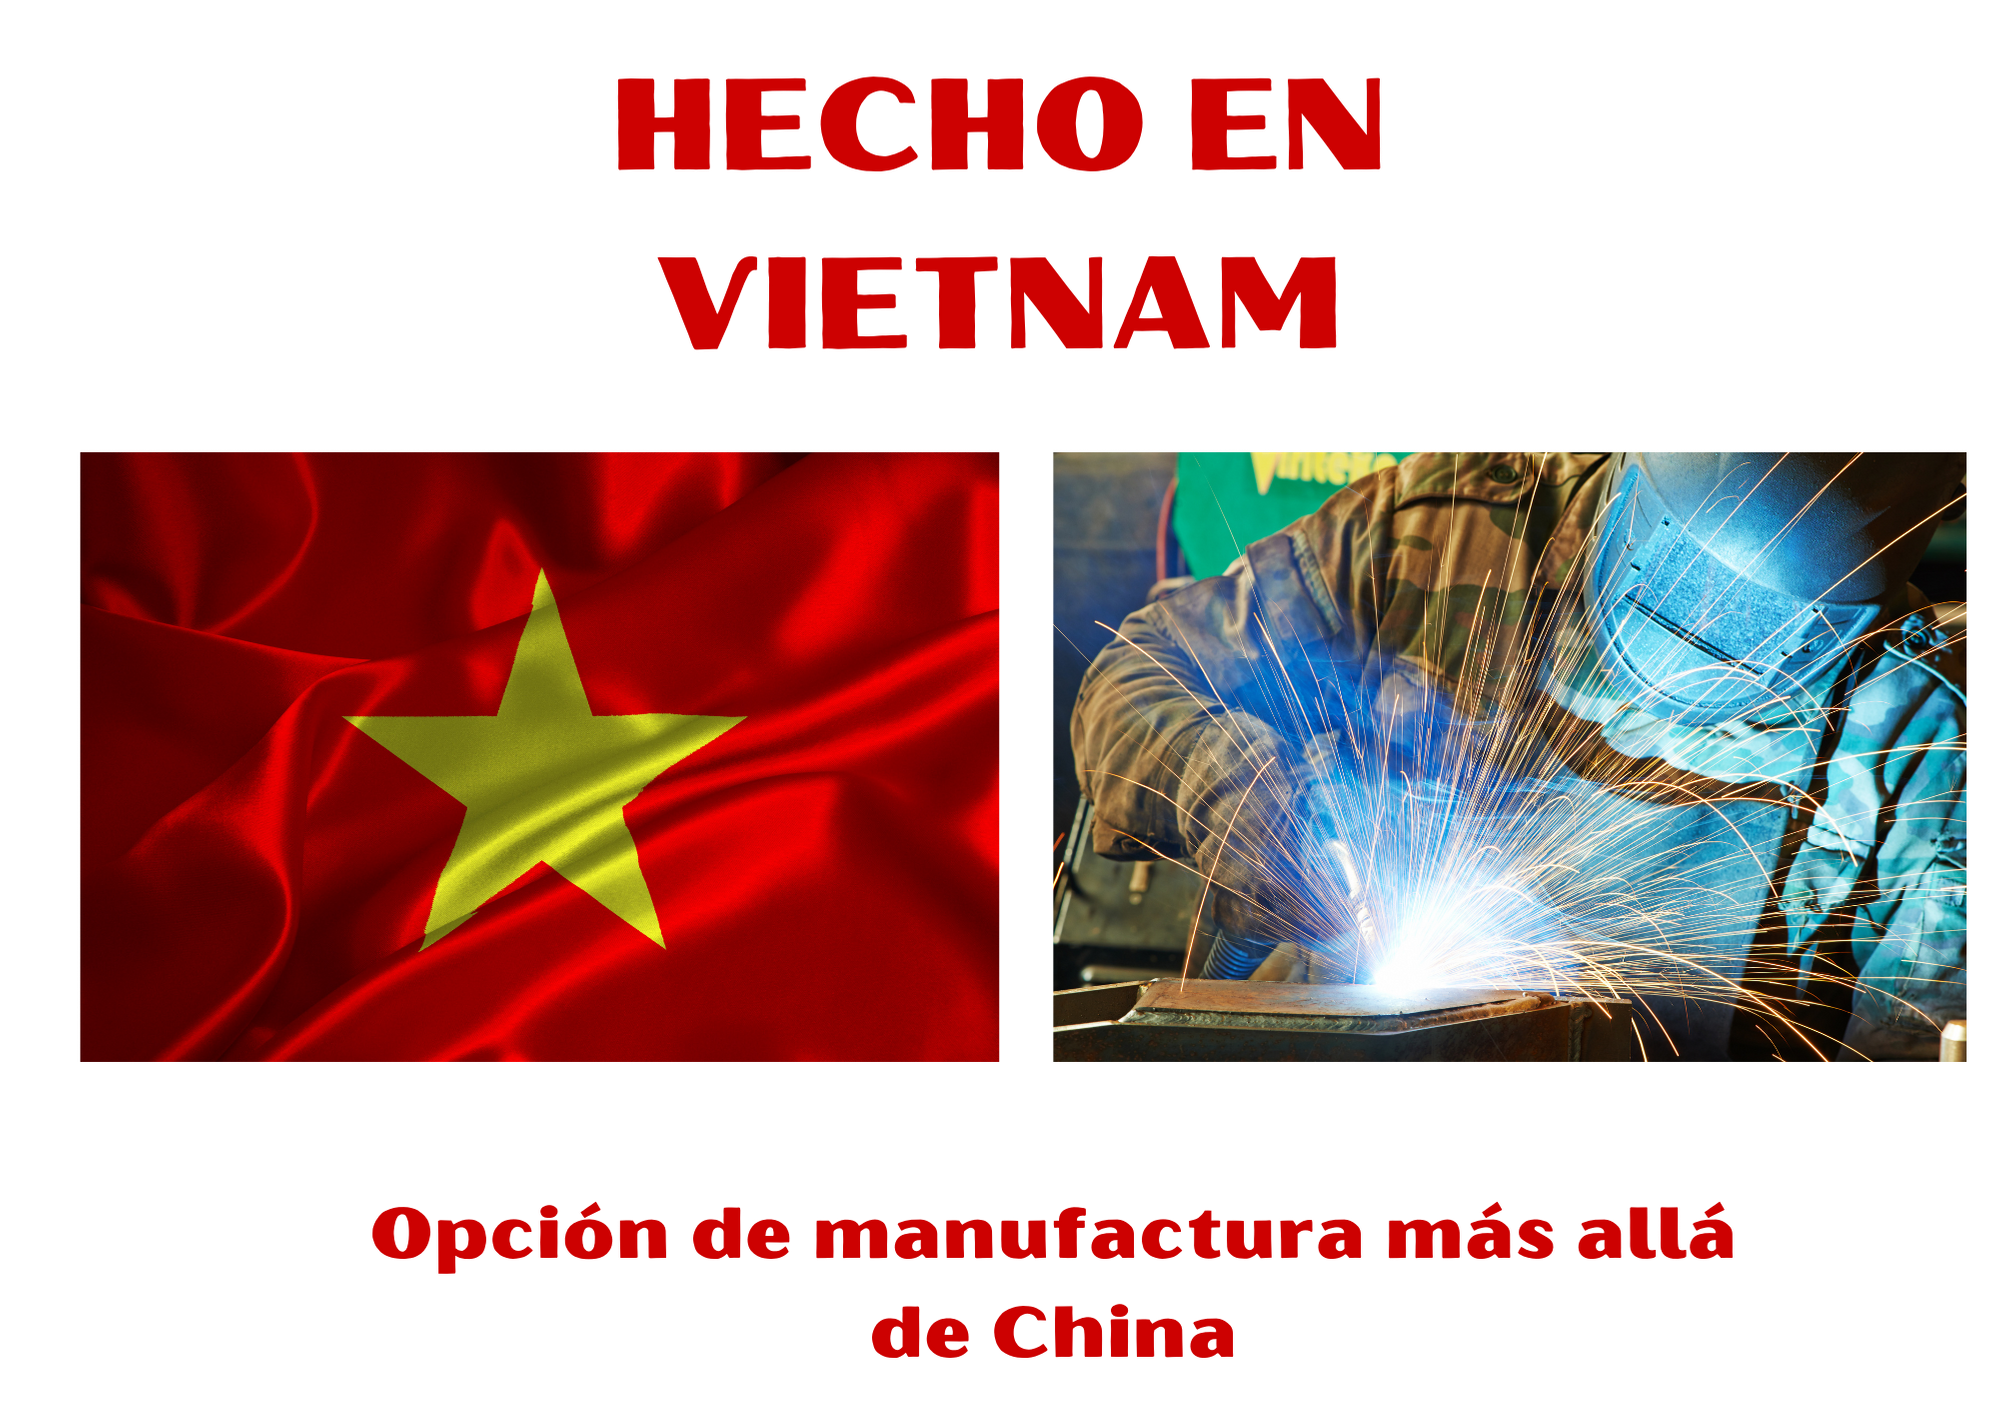 Manufacturing in Vietnam